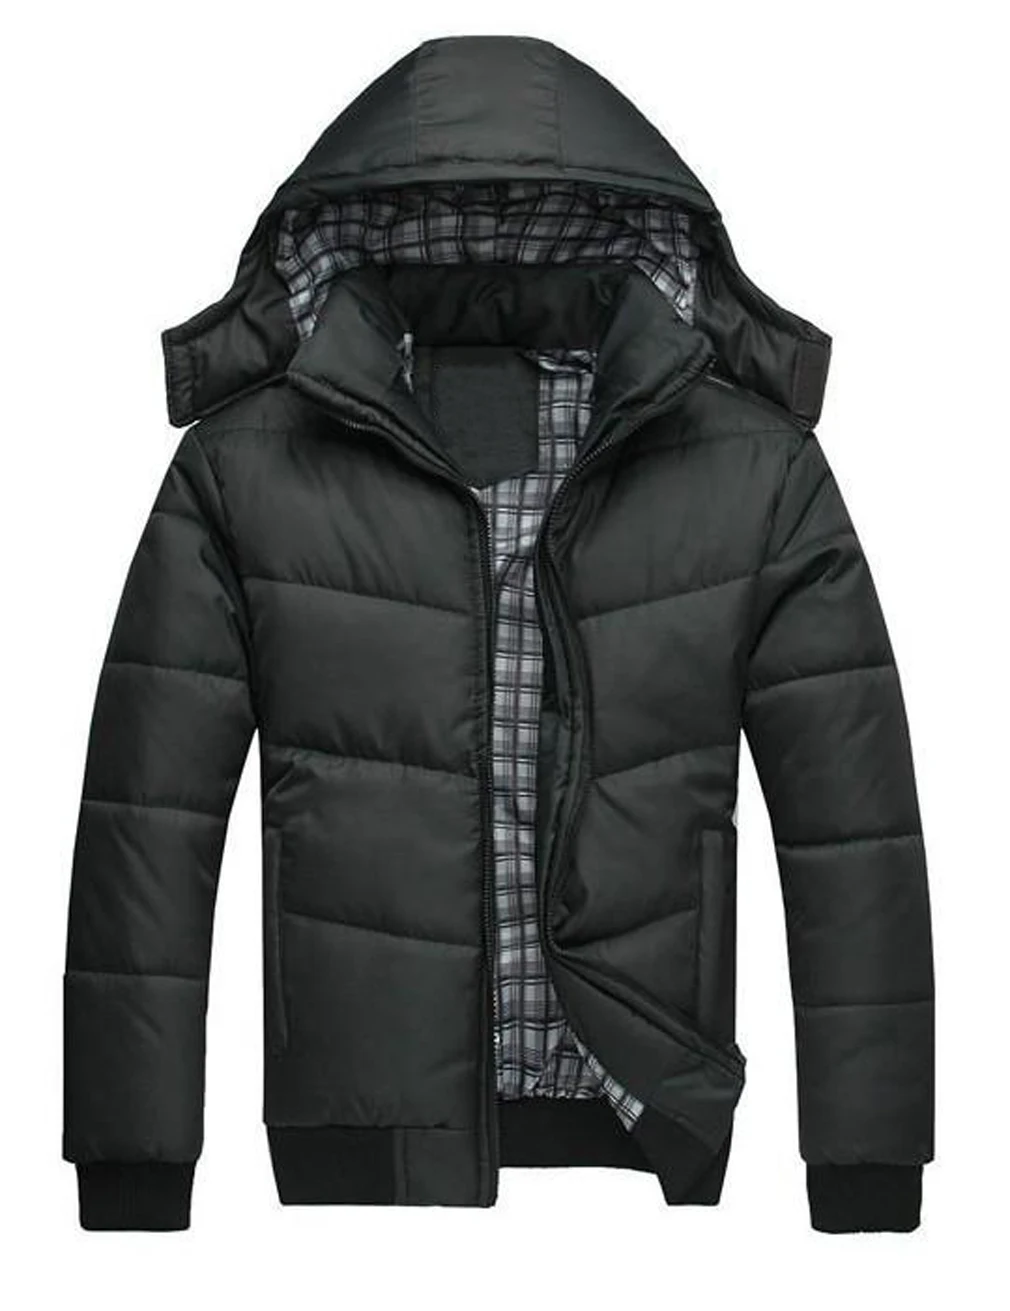 Winter Coat Men Quilted Black Puffer Jacket Warm Fashion Male Overcoat Parka Outwear Cotton Padded Hooded Coat Outwear